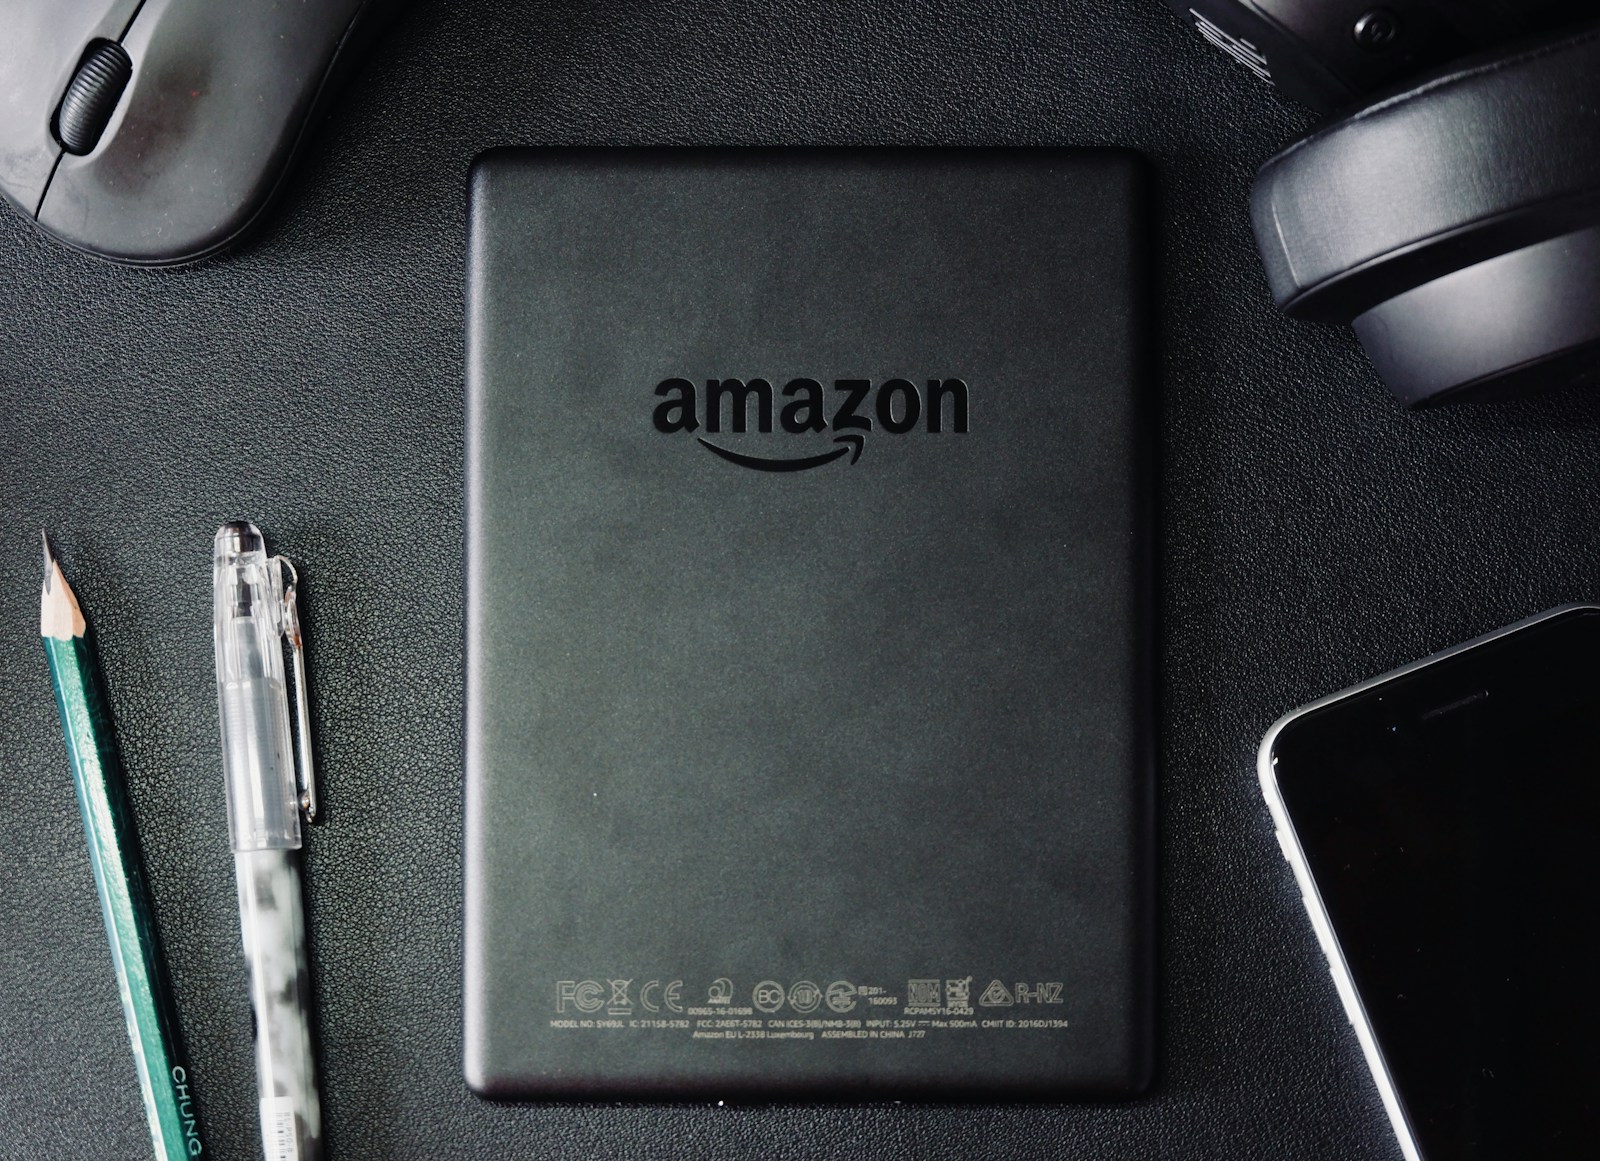 black tablet, amazon logo